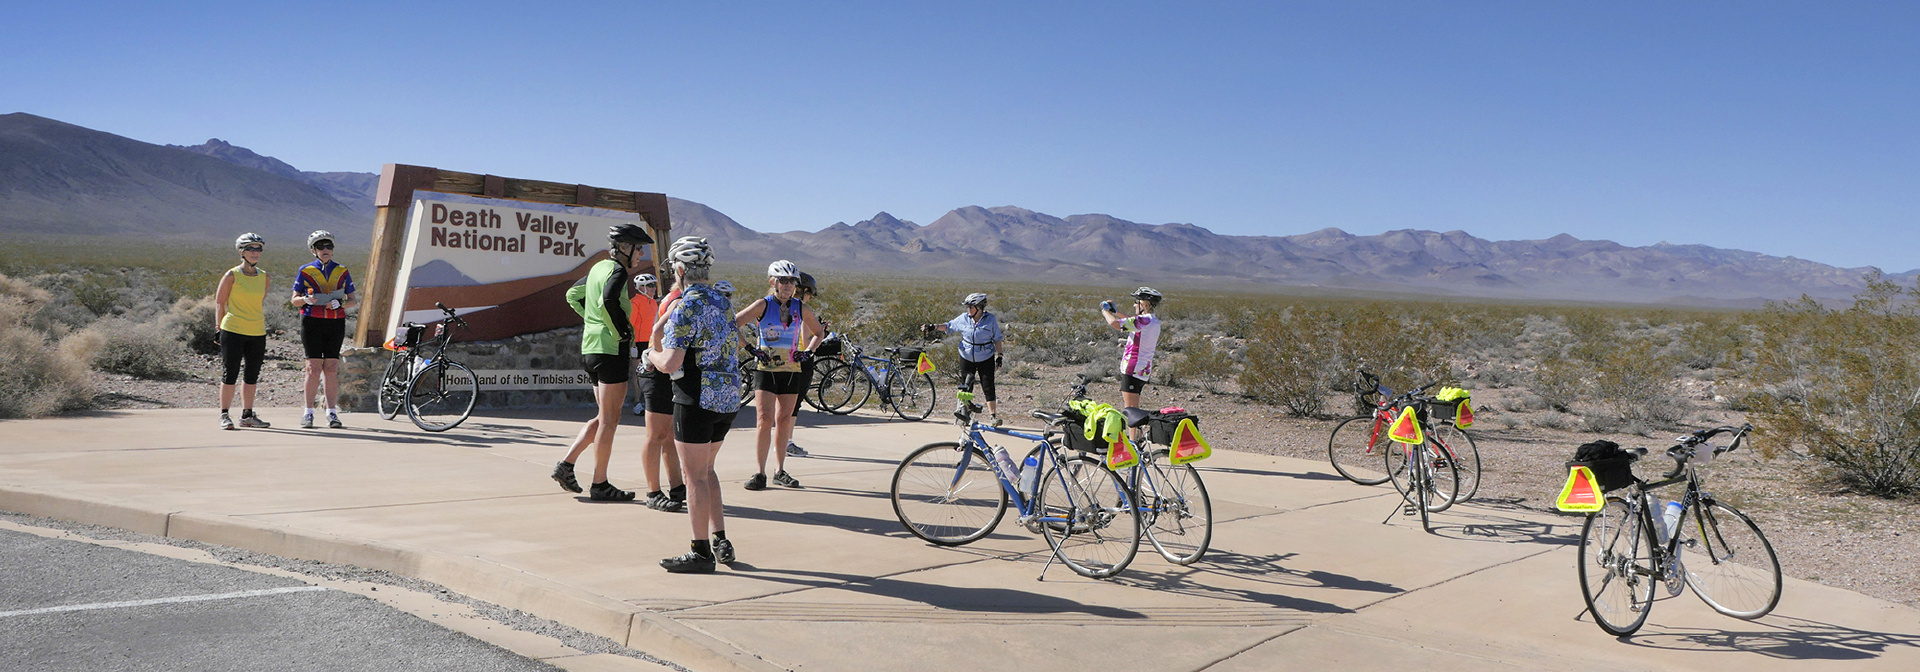 Death Valley National Park Bike Tour